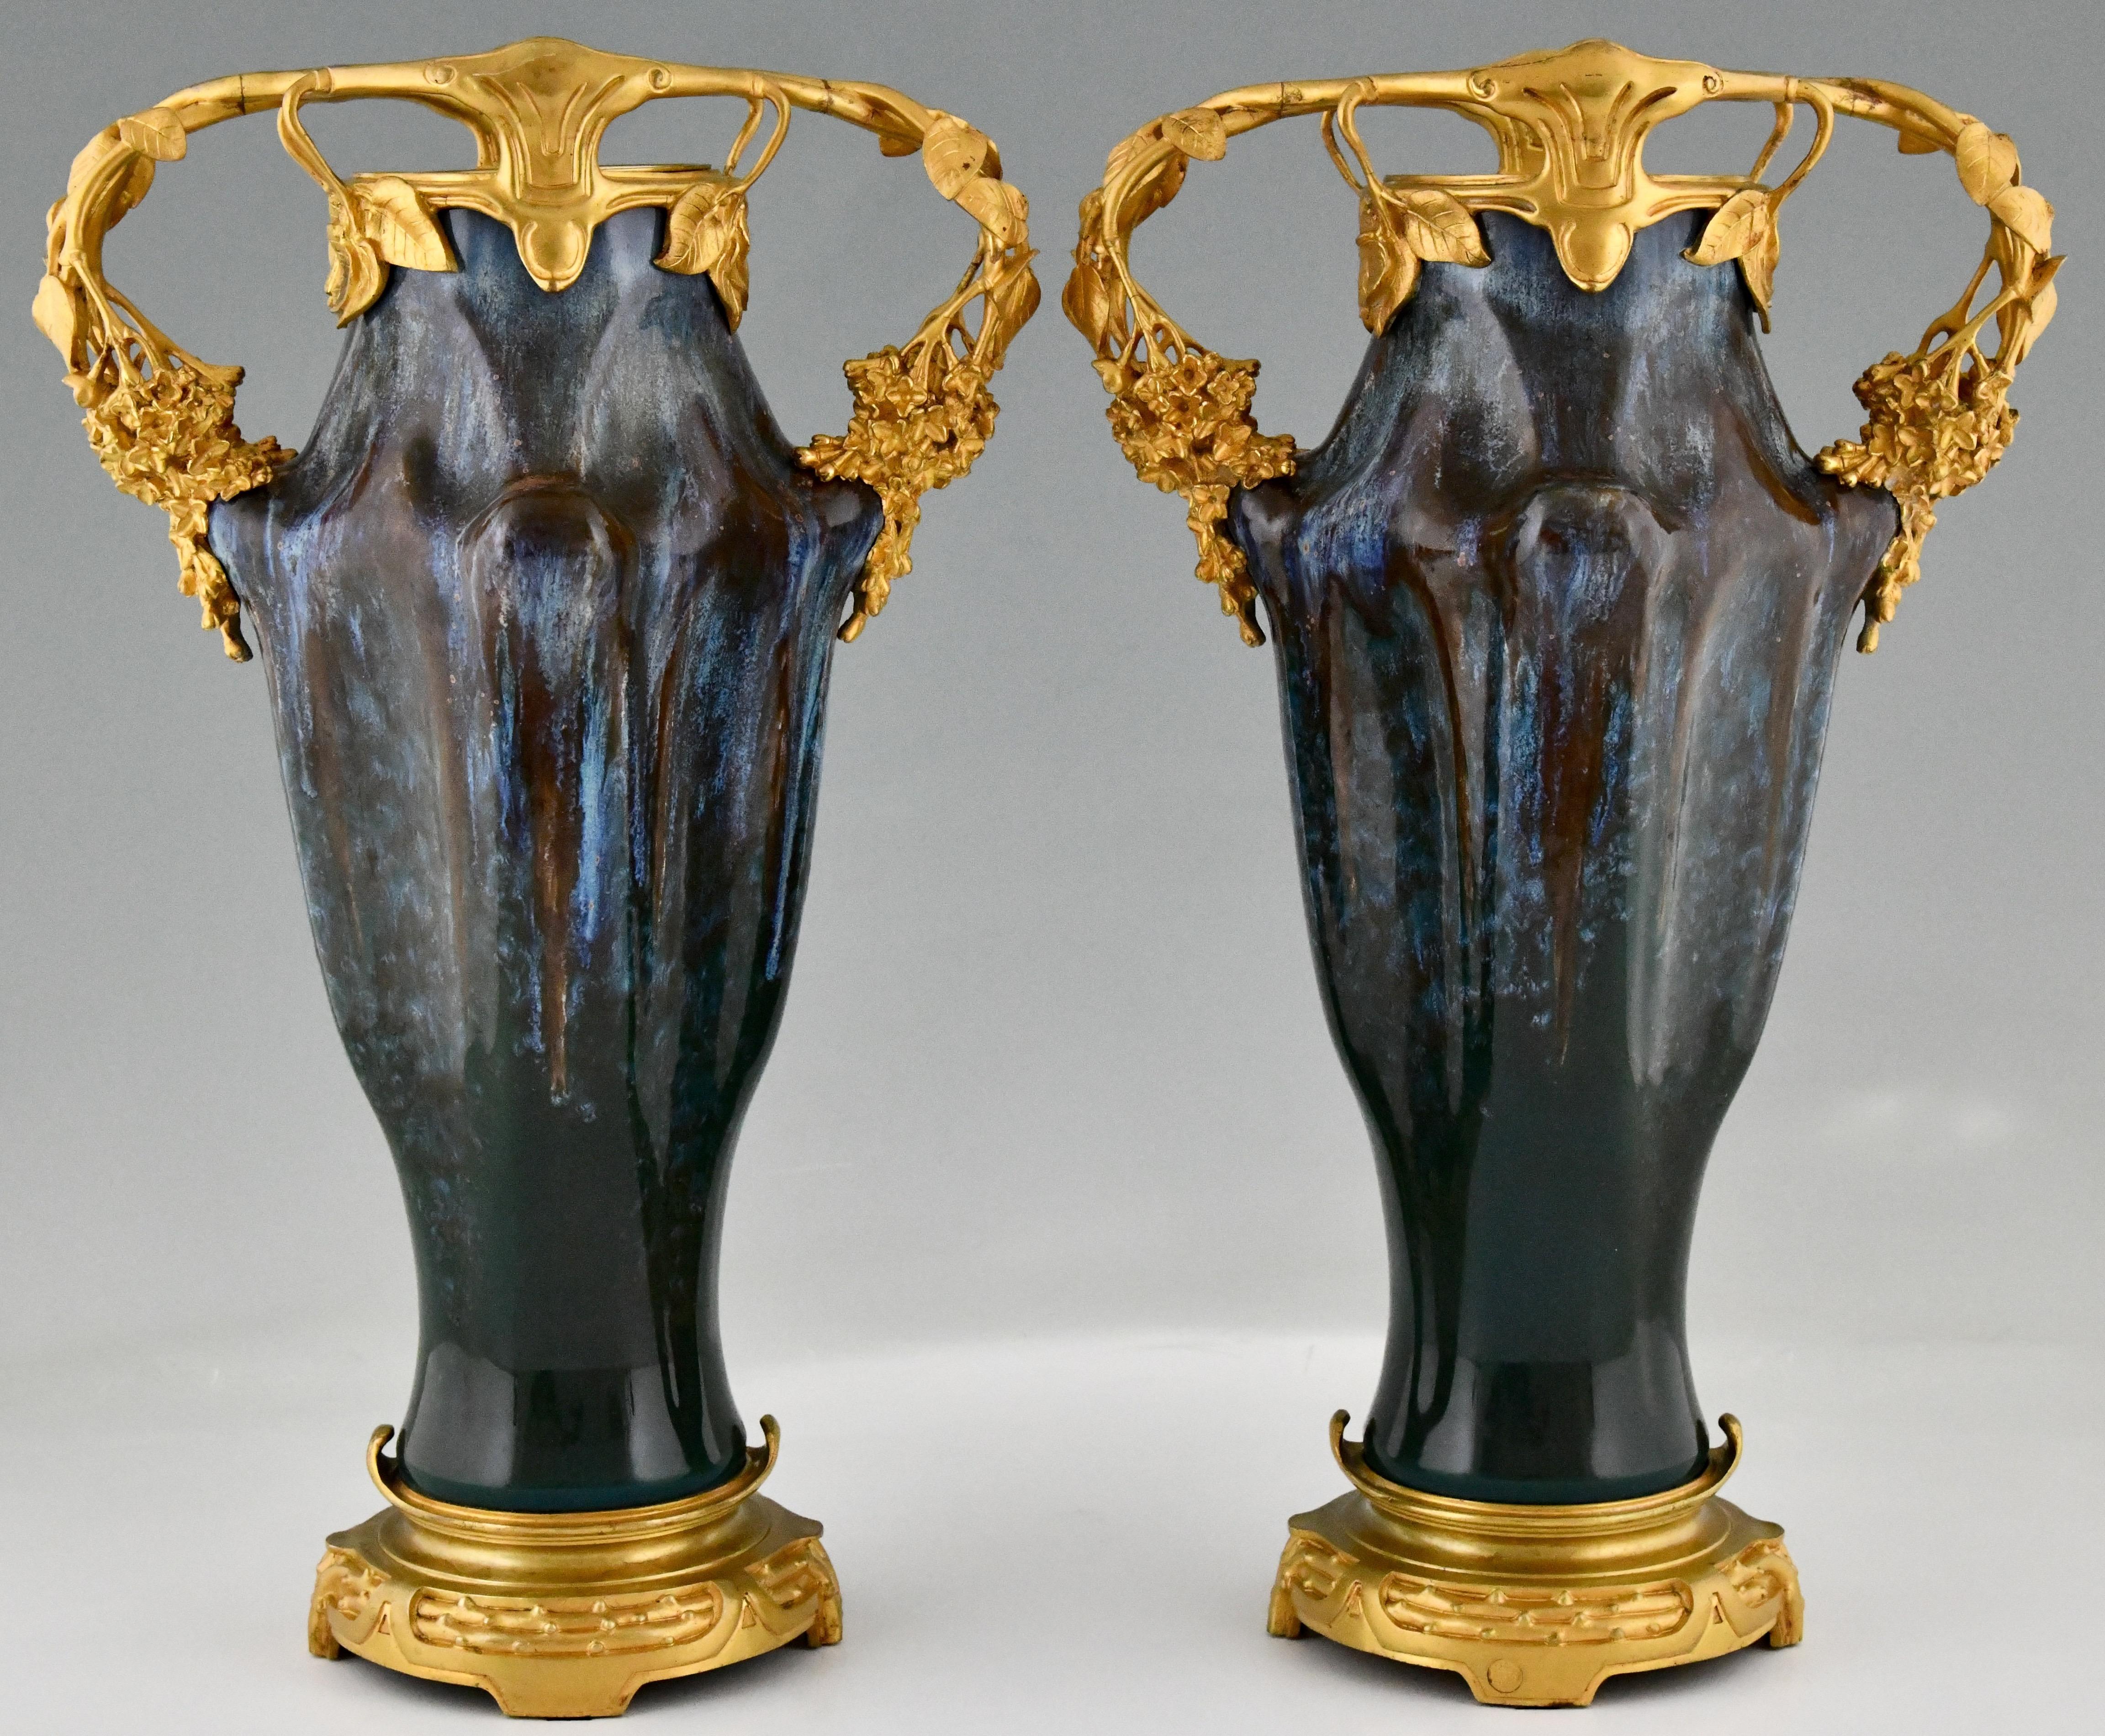 Pair of Art Nouveau ceramic and bronze vases by Paul Louchet (1854-1936).
Alphonse Lamarre & Manufacture Pillivuyt. 
Ceramic with blue and grey enamel. 
Gilt bronze. 
France 1900.